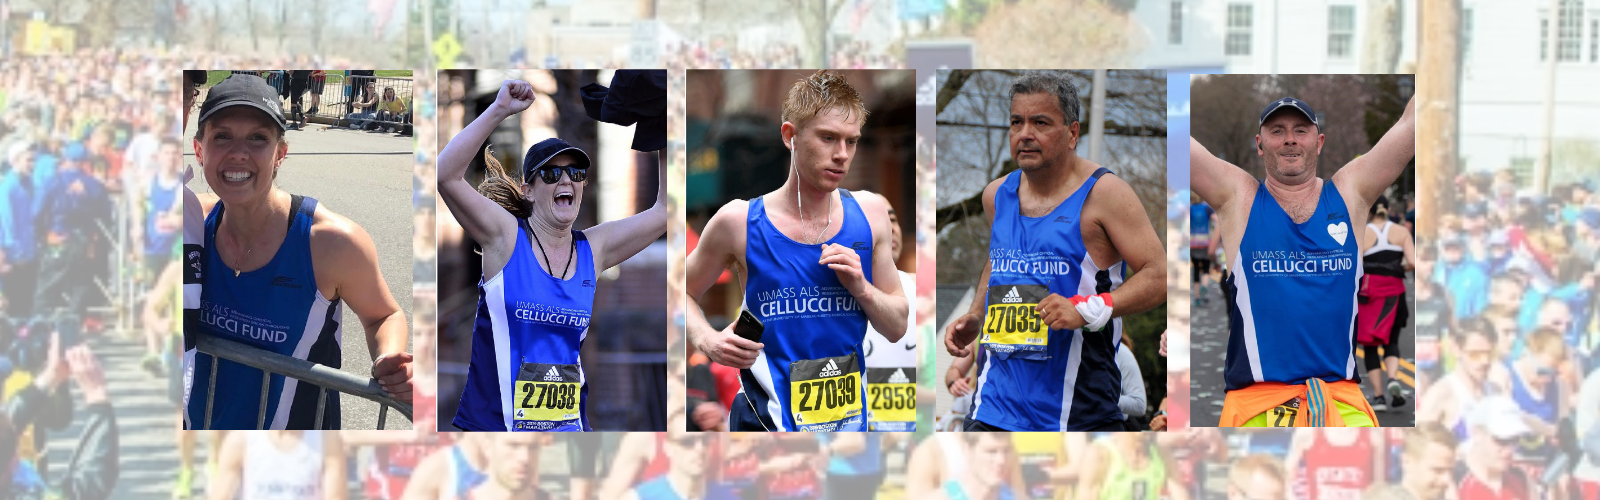 UMass ALS Cellucci Fund 2019 Boston Marathon team